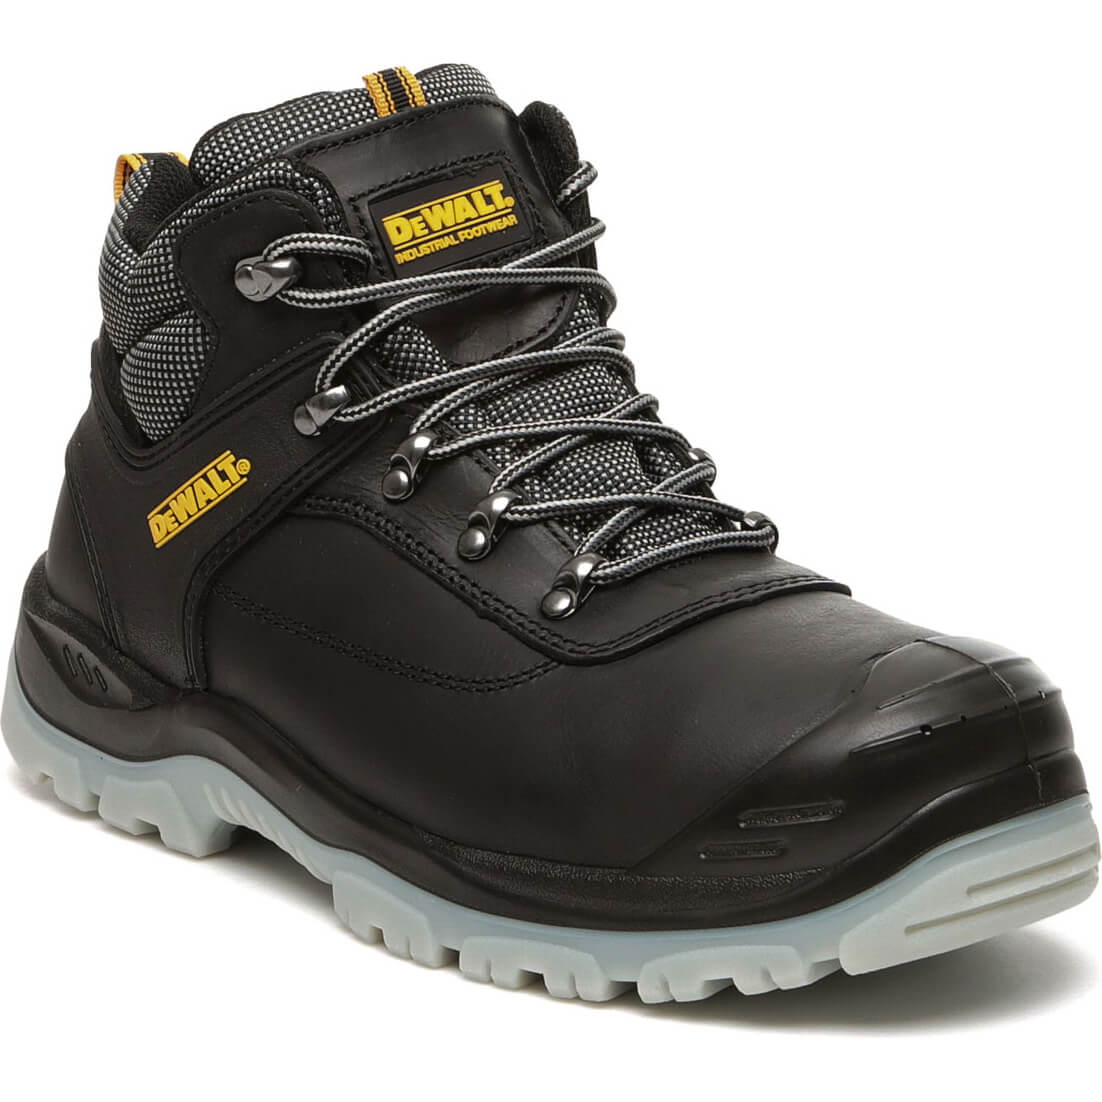 Photos - Safety Equipment DeWALT Laser Safety Hiker Boots Black Size 3 